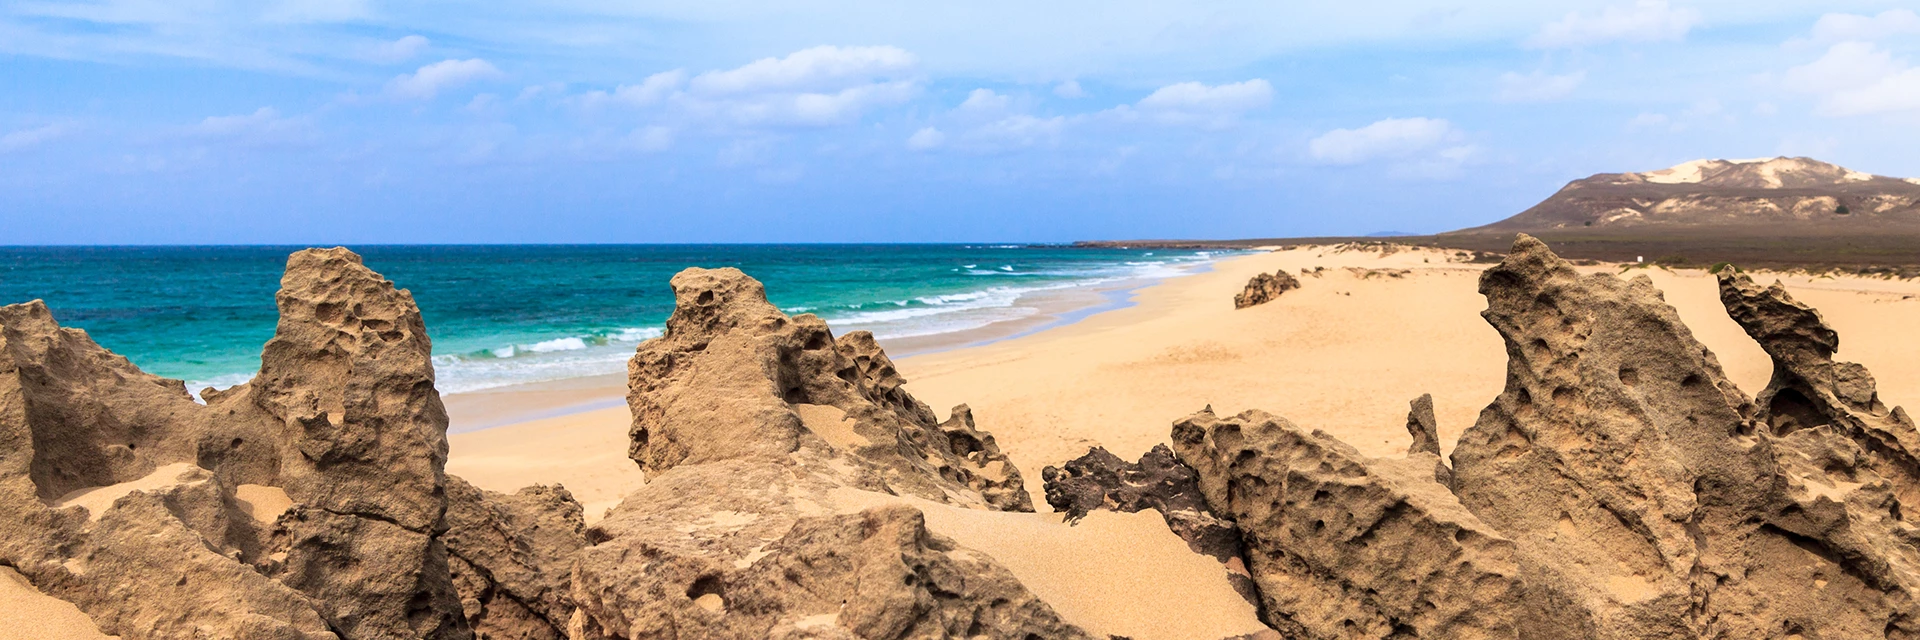 B Beachoa Vista Cape Verde Islands